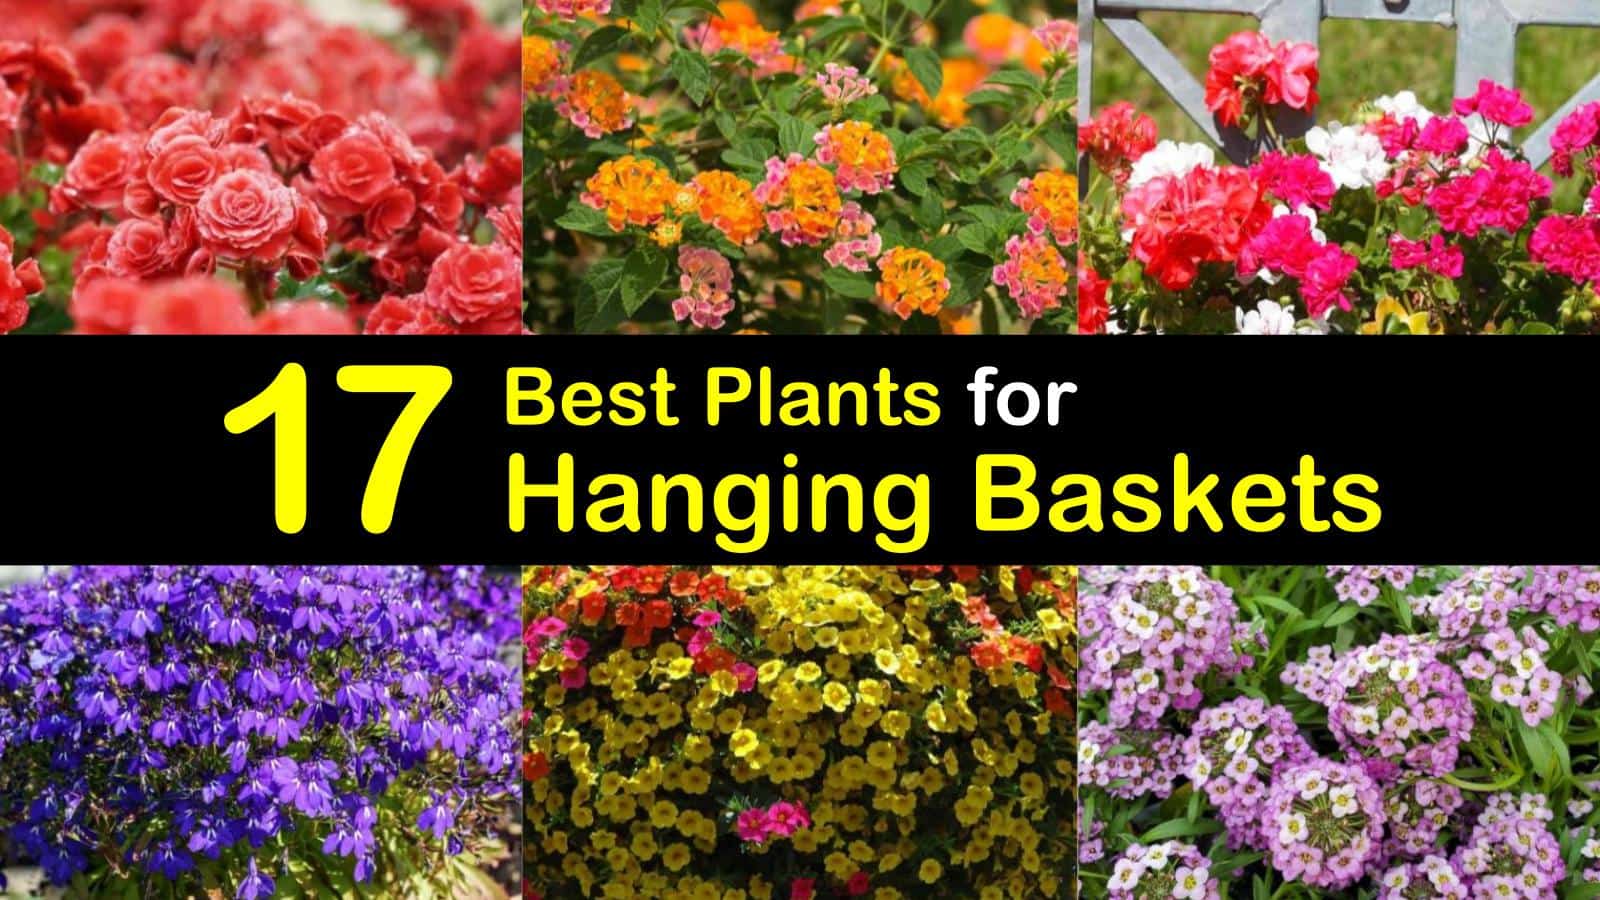 best plants for hanging baskets titleimg1